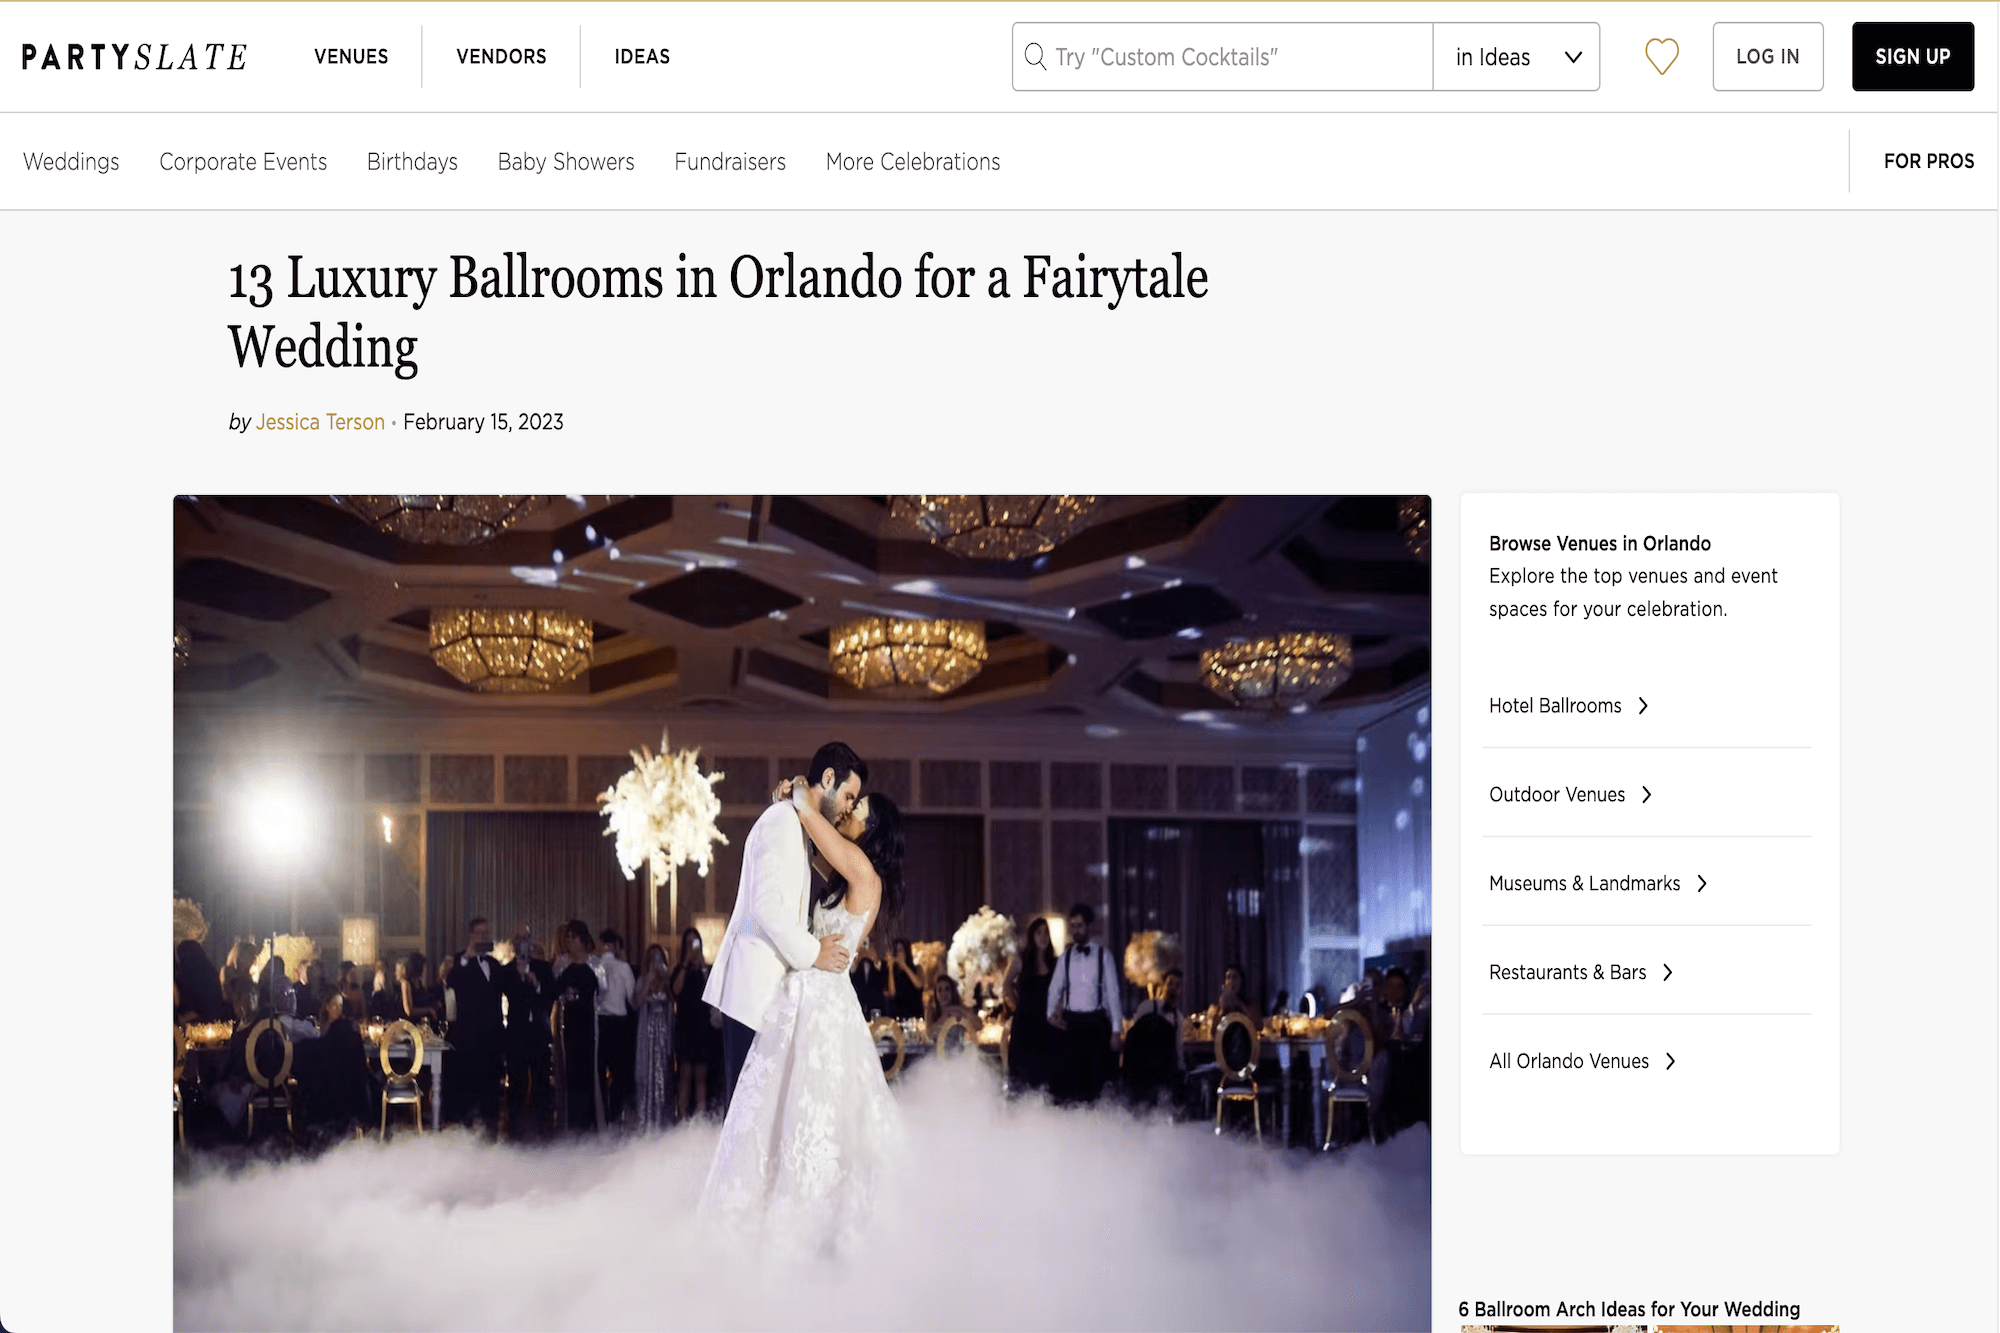 13 Luxury Ballrooms in Orlando for a Fairytale Wedding